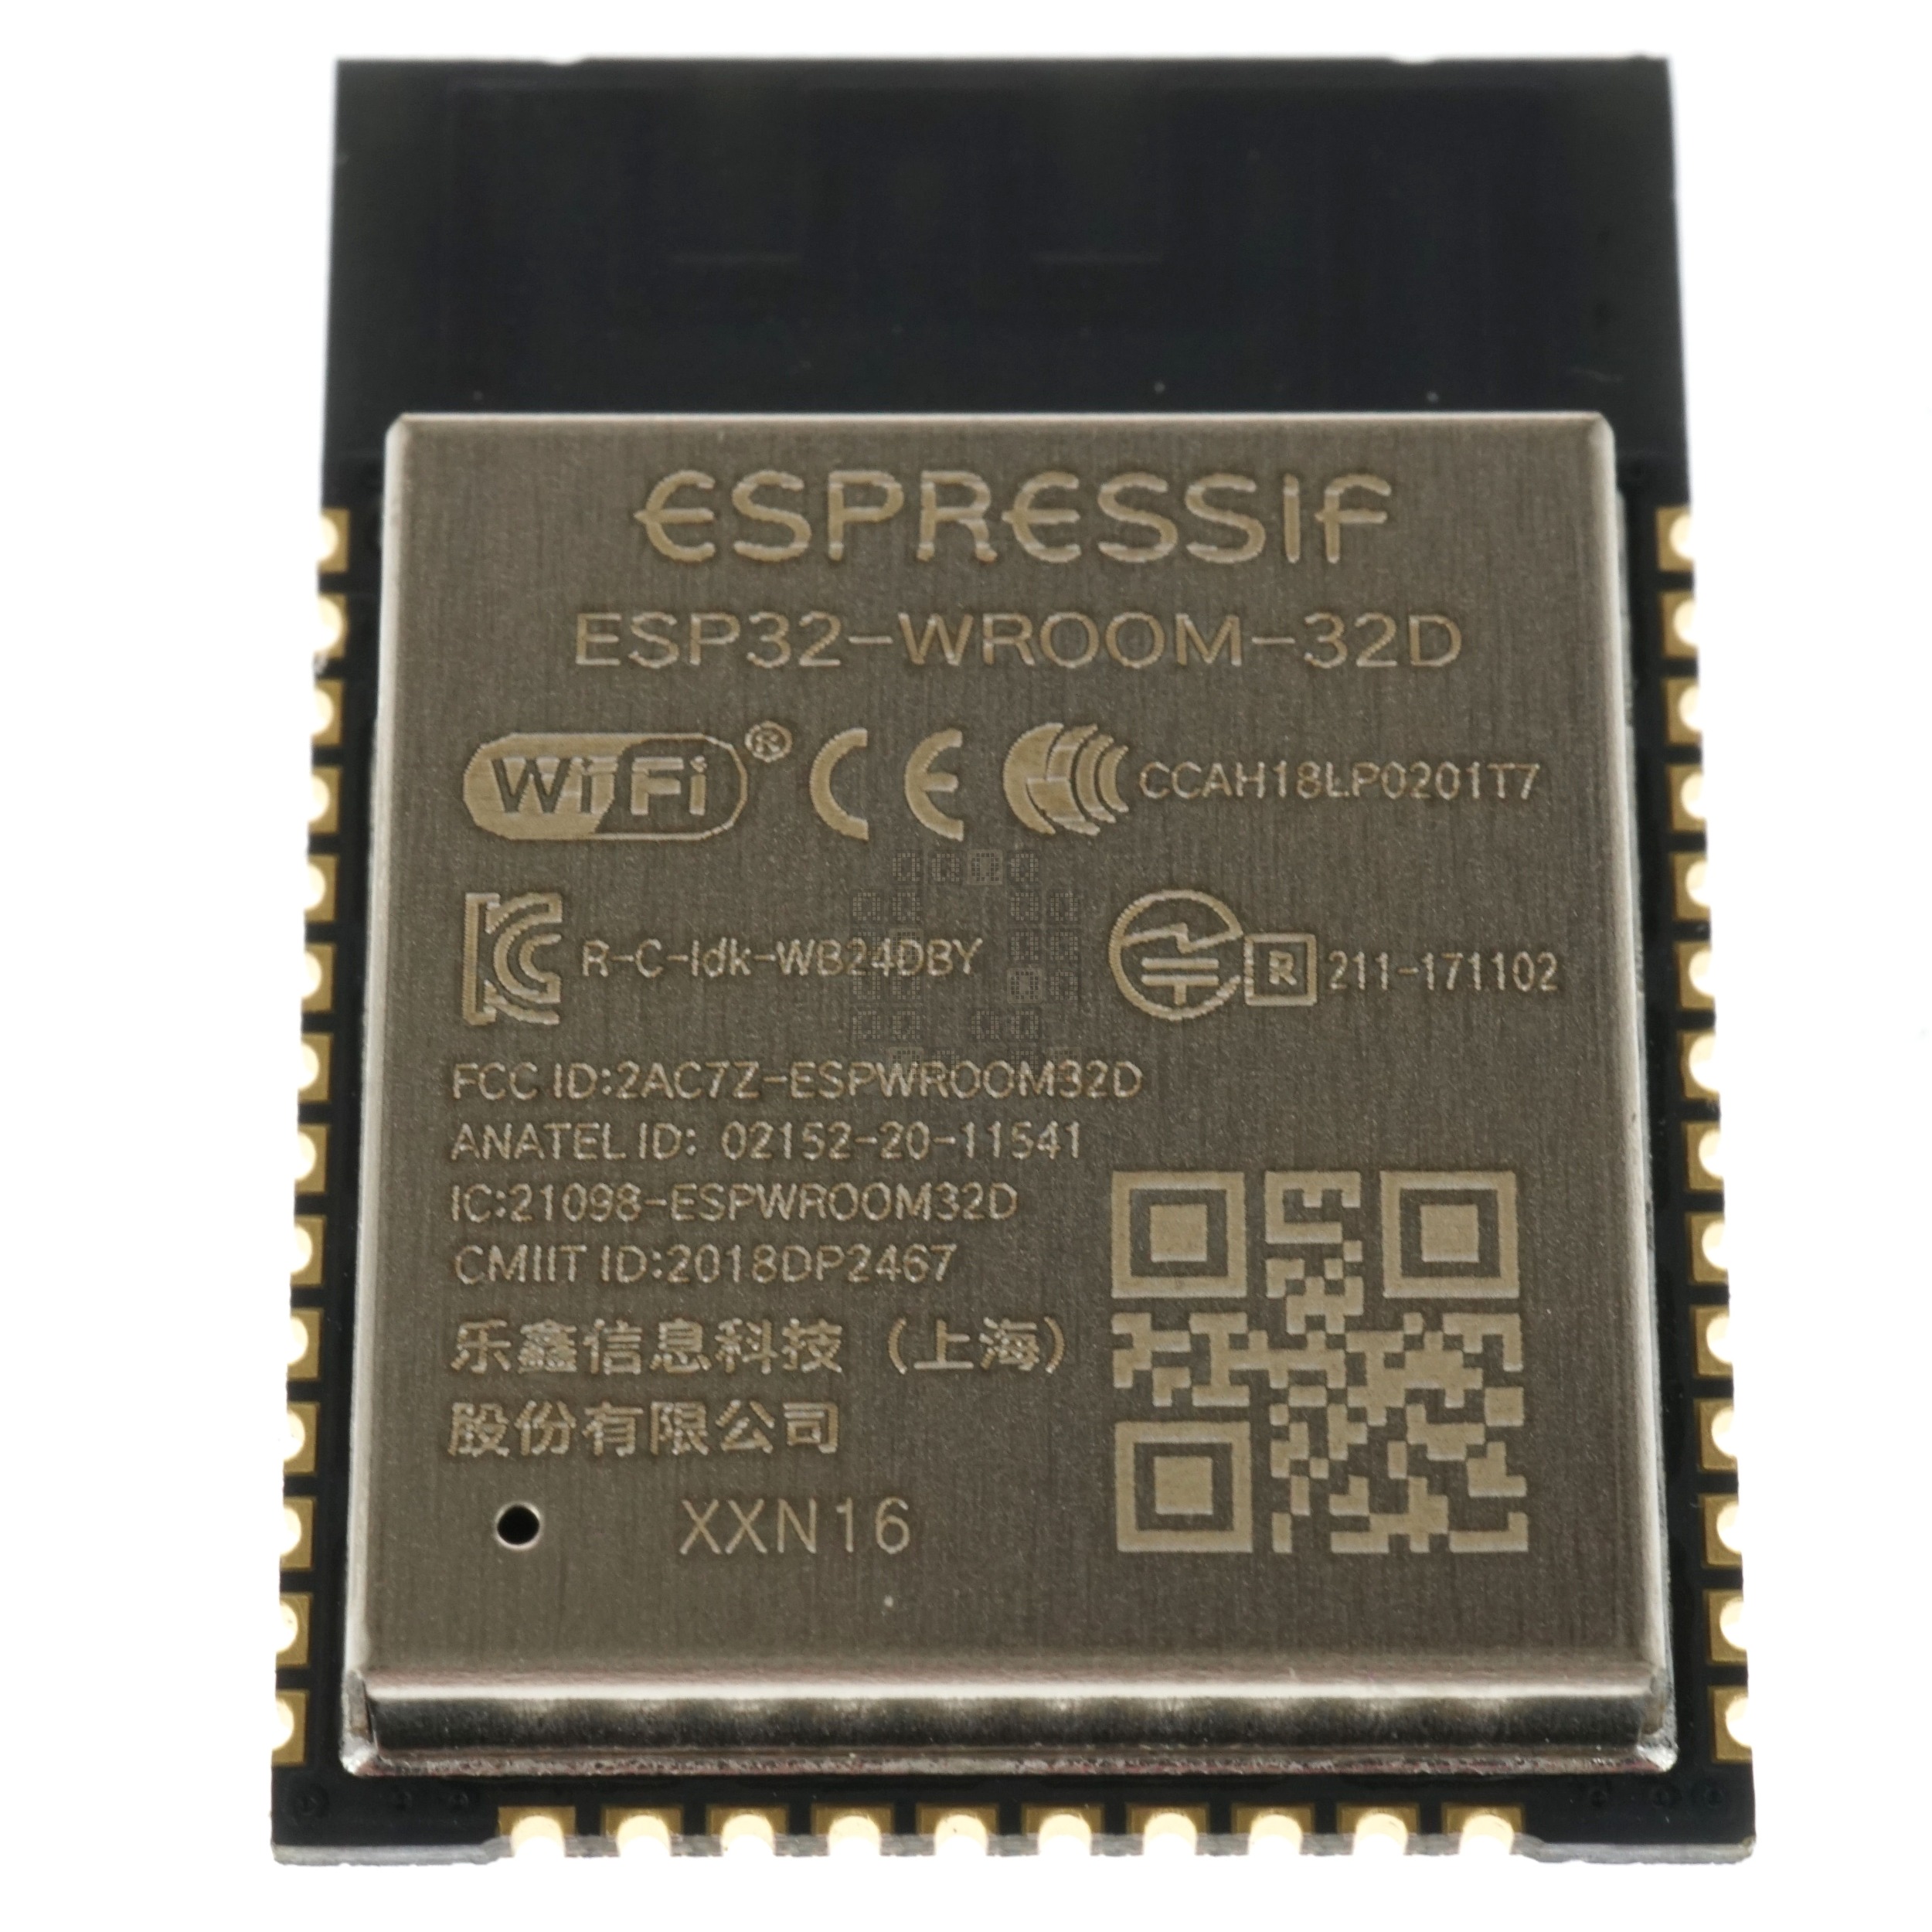 Espressif ESP32-WROOM-32D-XXN16 Microprocessor with Wi-Fi & Bluetooth, 16MB Flash